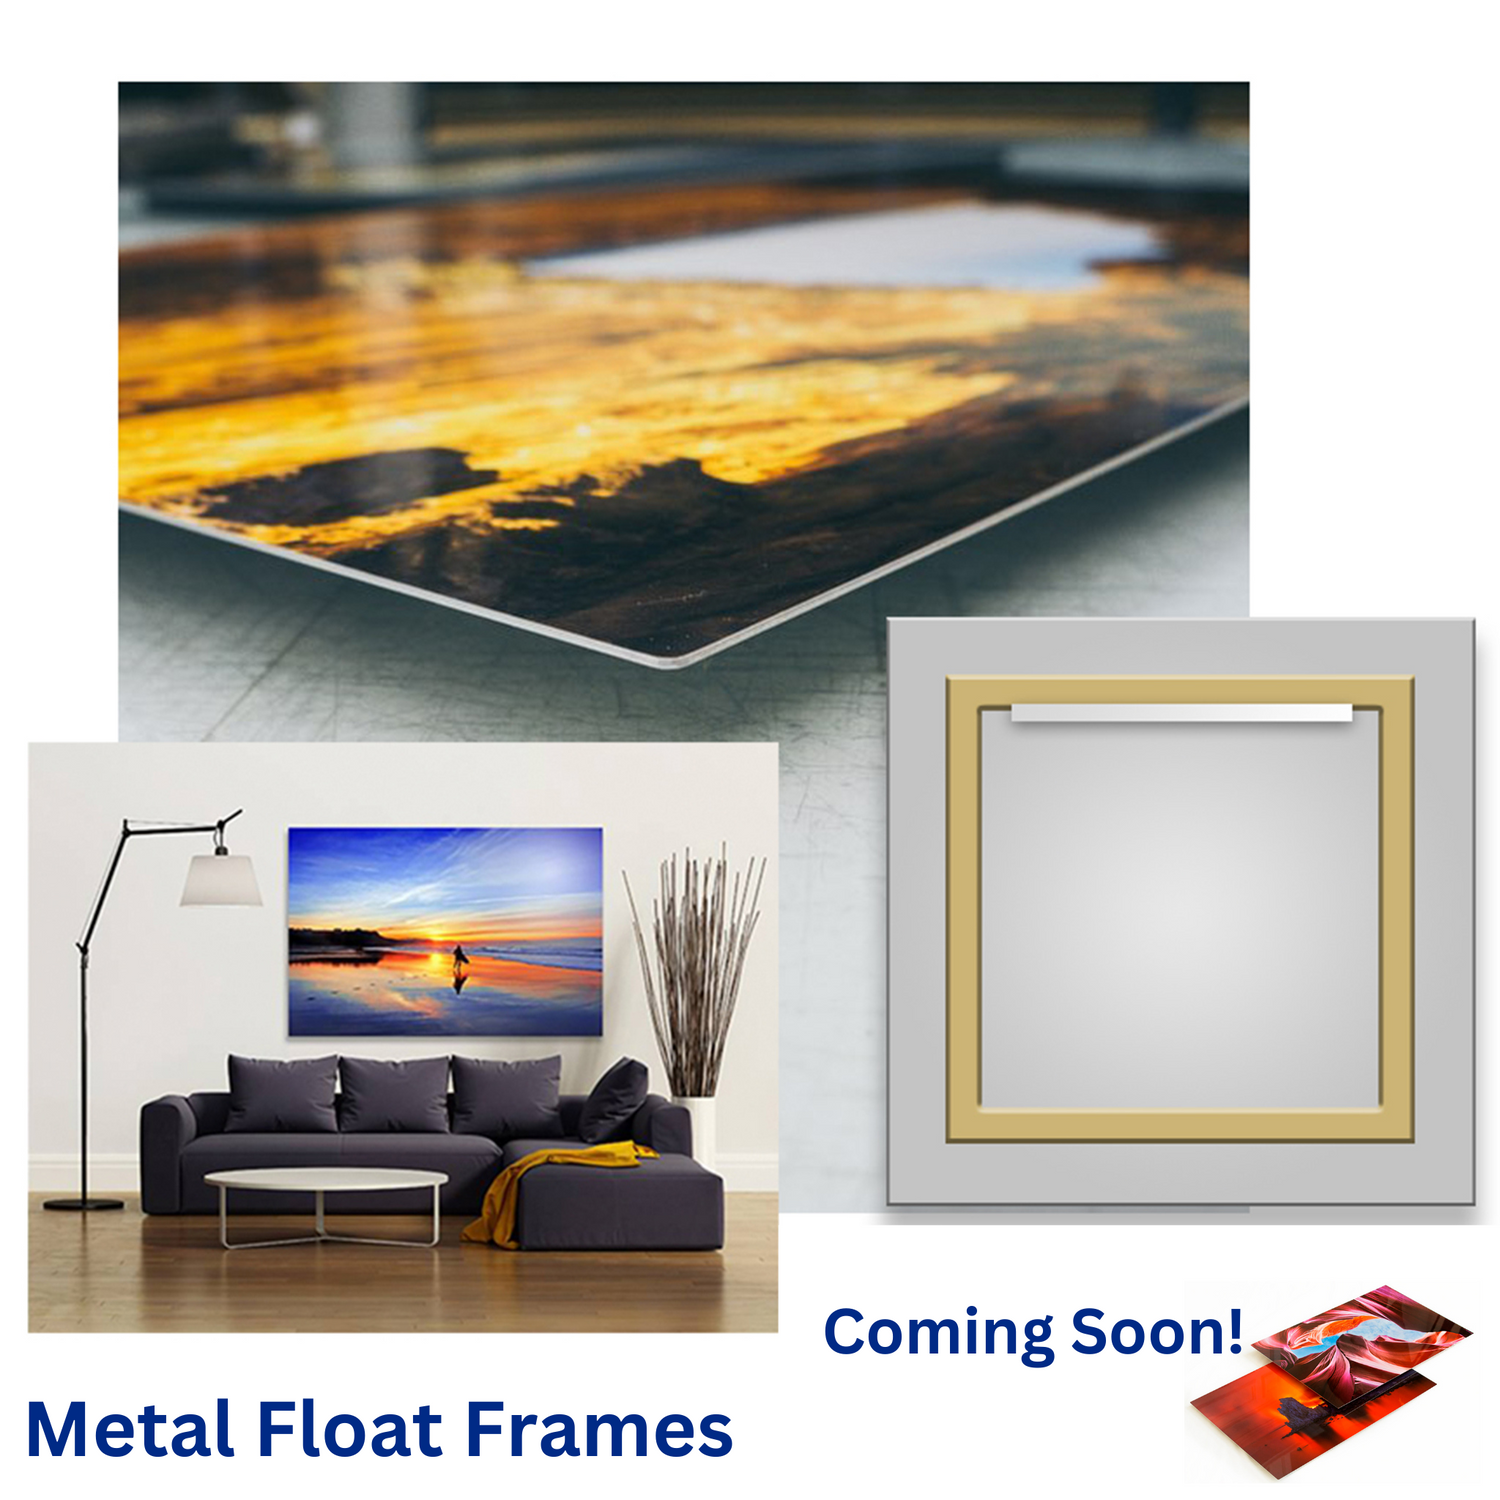 Metal Float Frames - Vivid Photos ready to hang